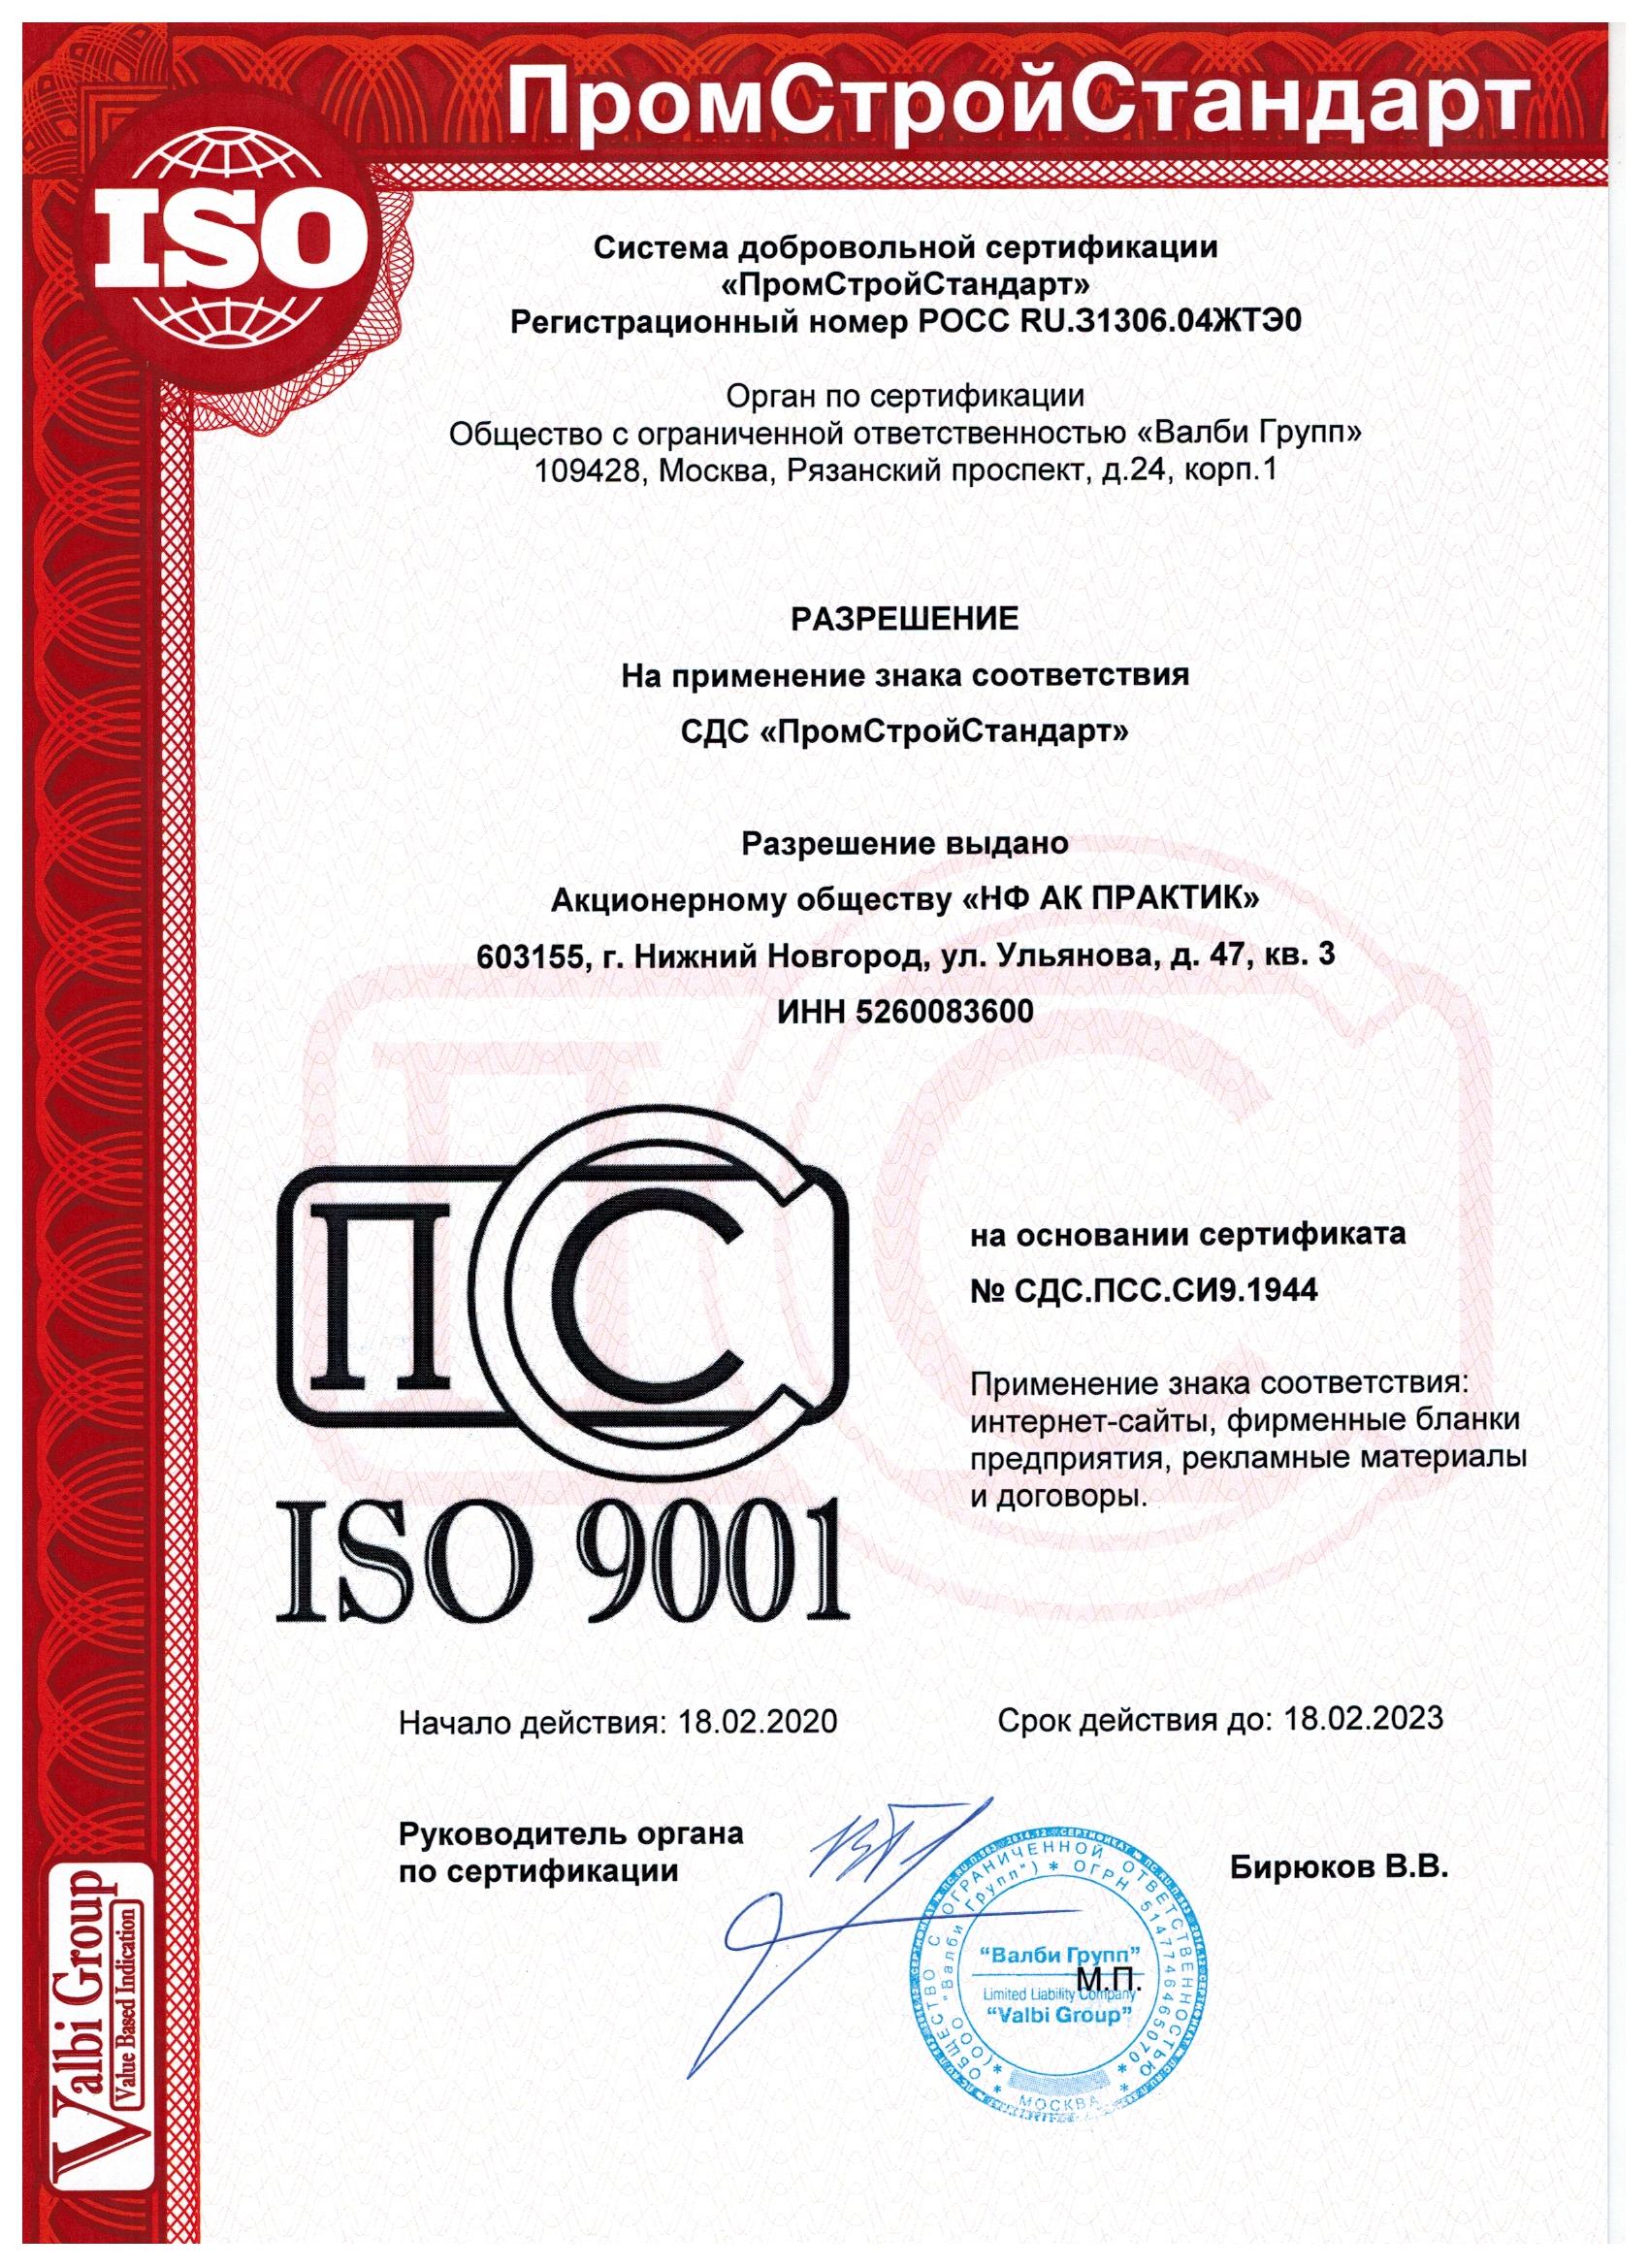 ISO 9001_разрешение